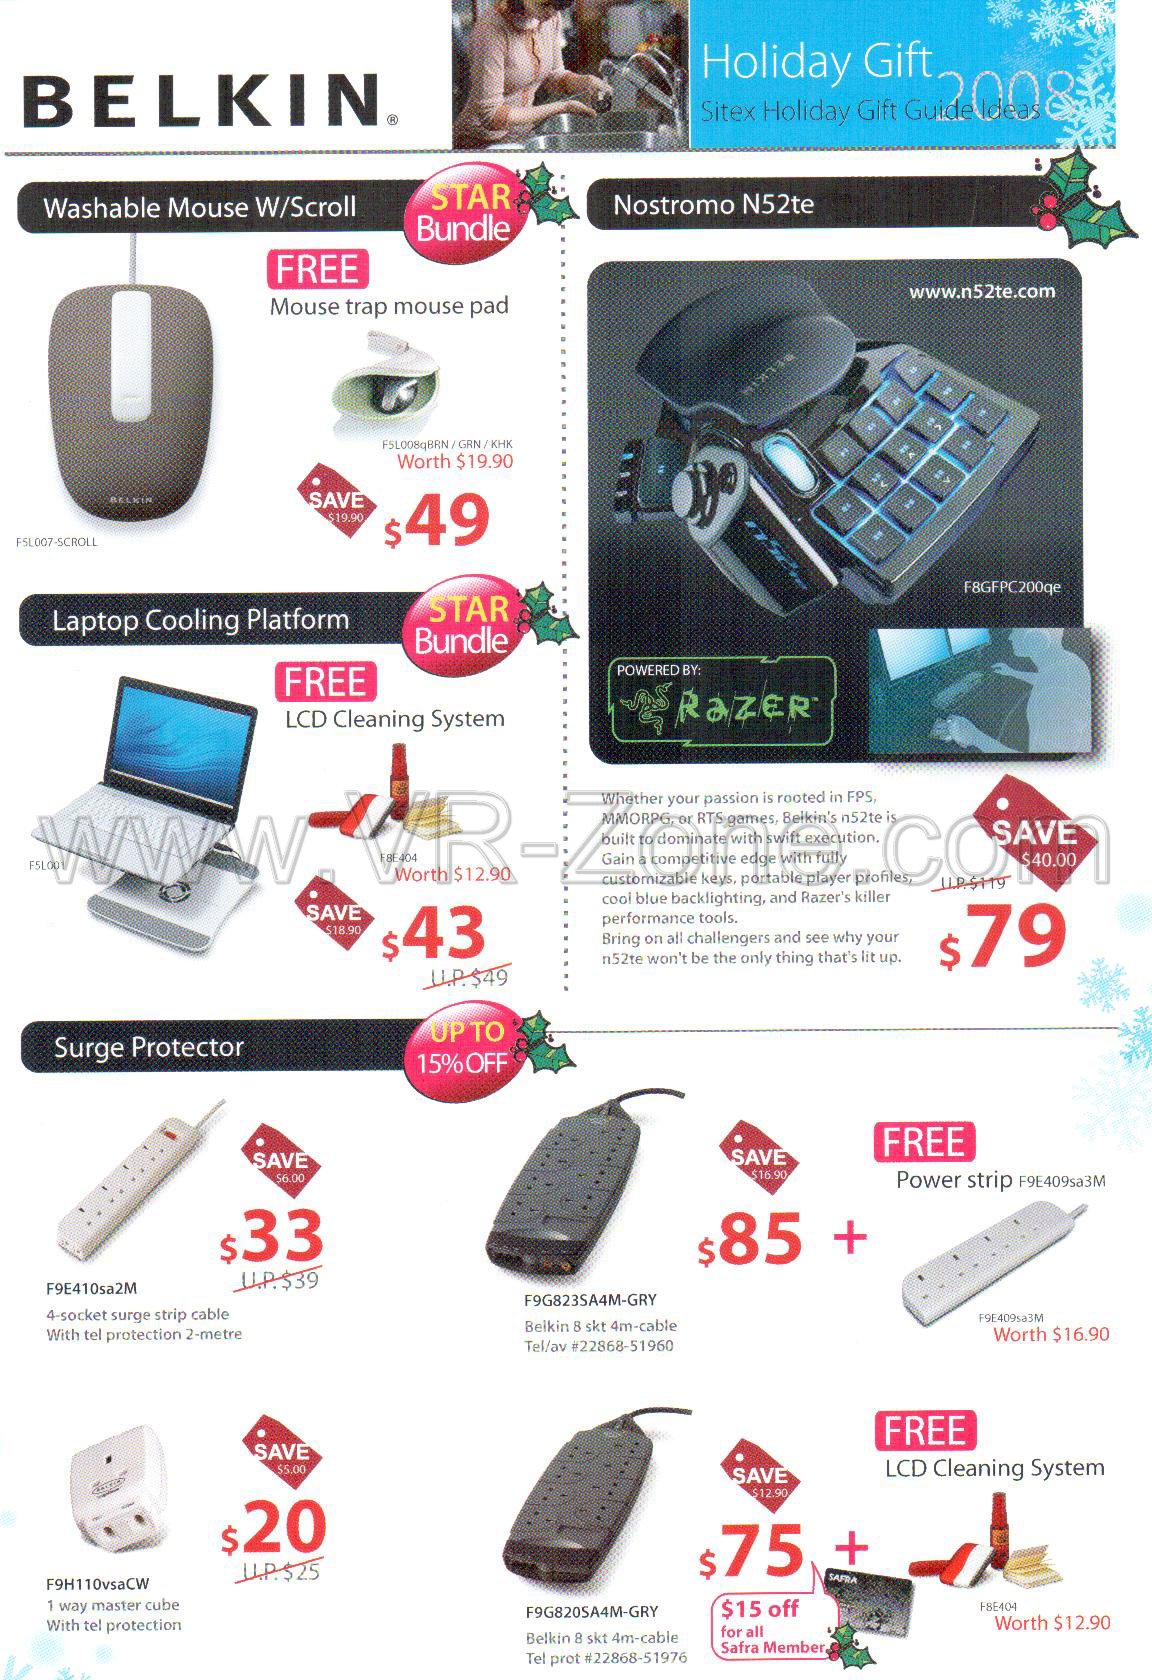 Sitex 2008 price list image brochure of Belkin 4